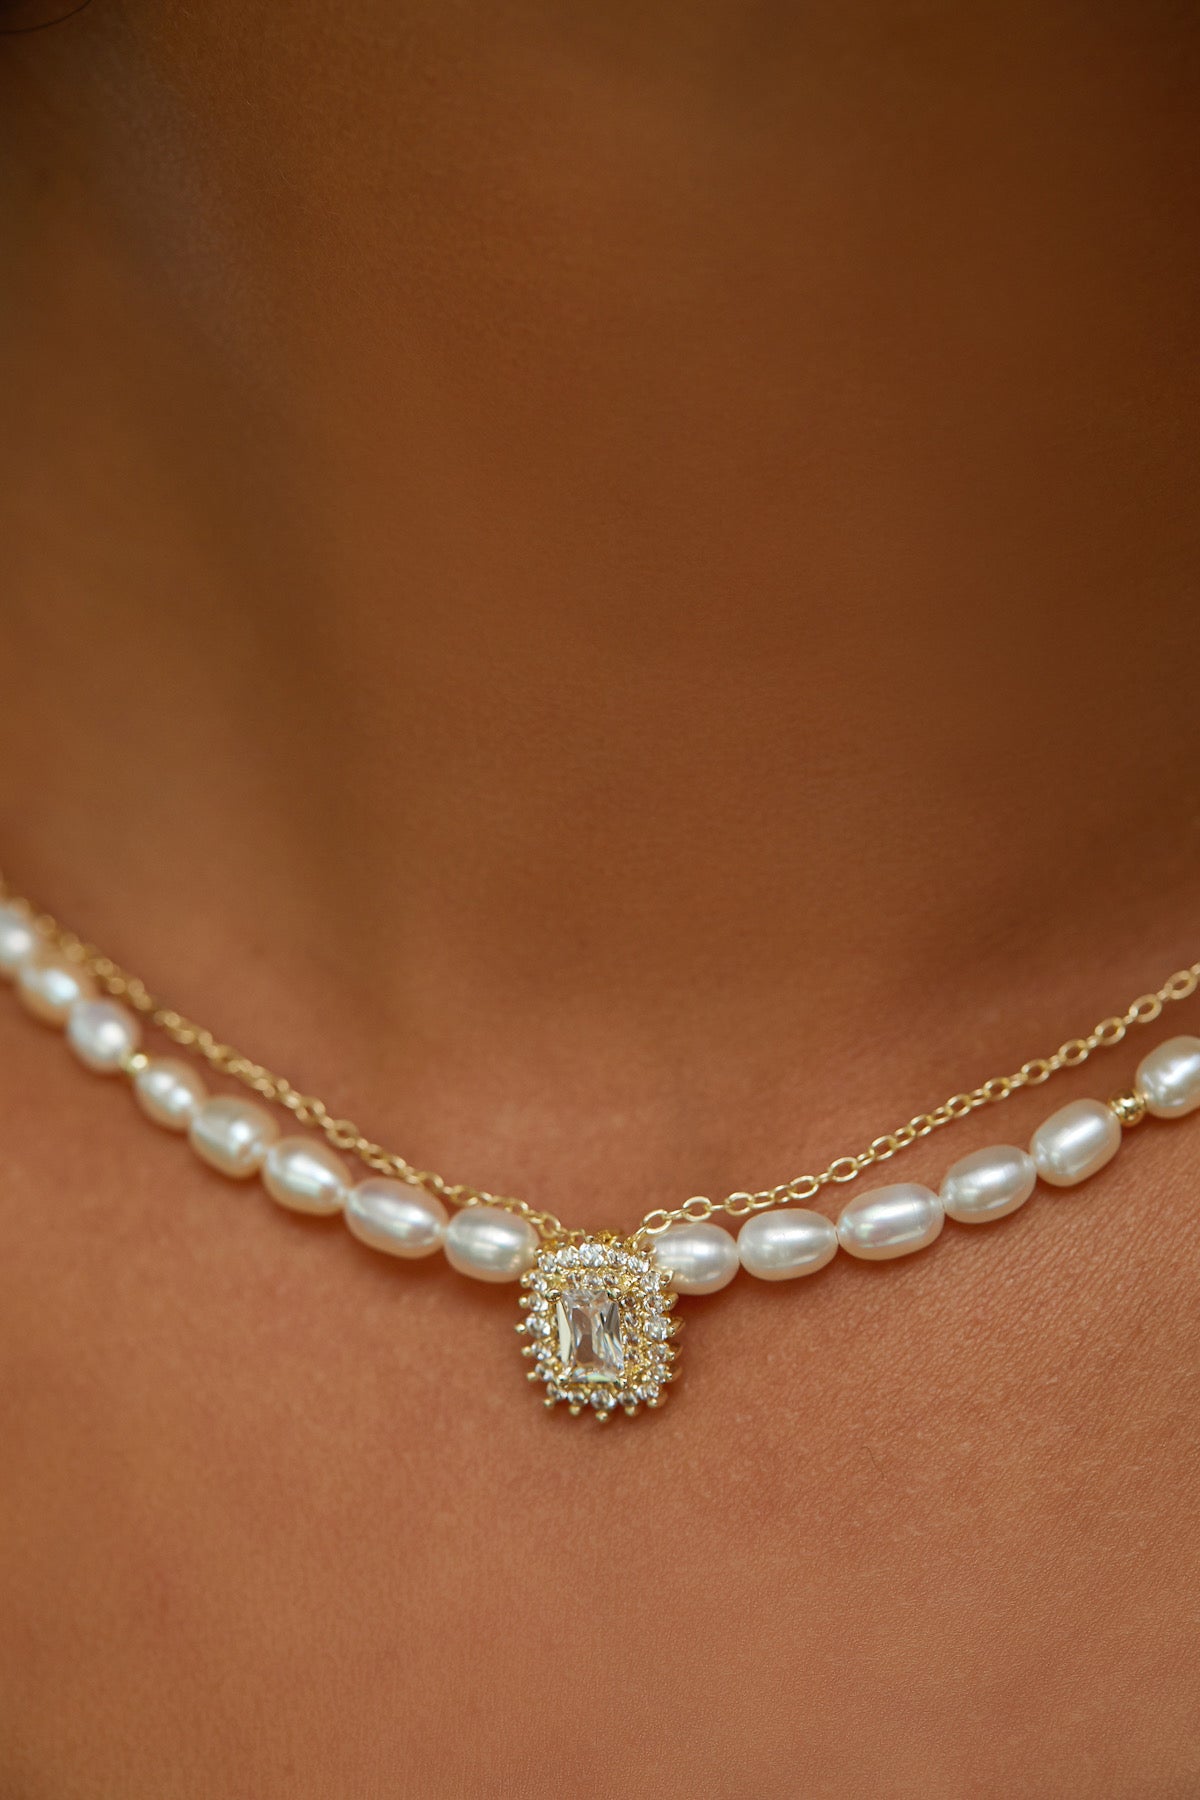 SKYE Shop Chic Modern Elegant Classy Women Jewelry French Parisian Minimalist Jolie Freshwater Pearl Crystal Pendant Necklace 6